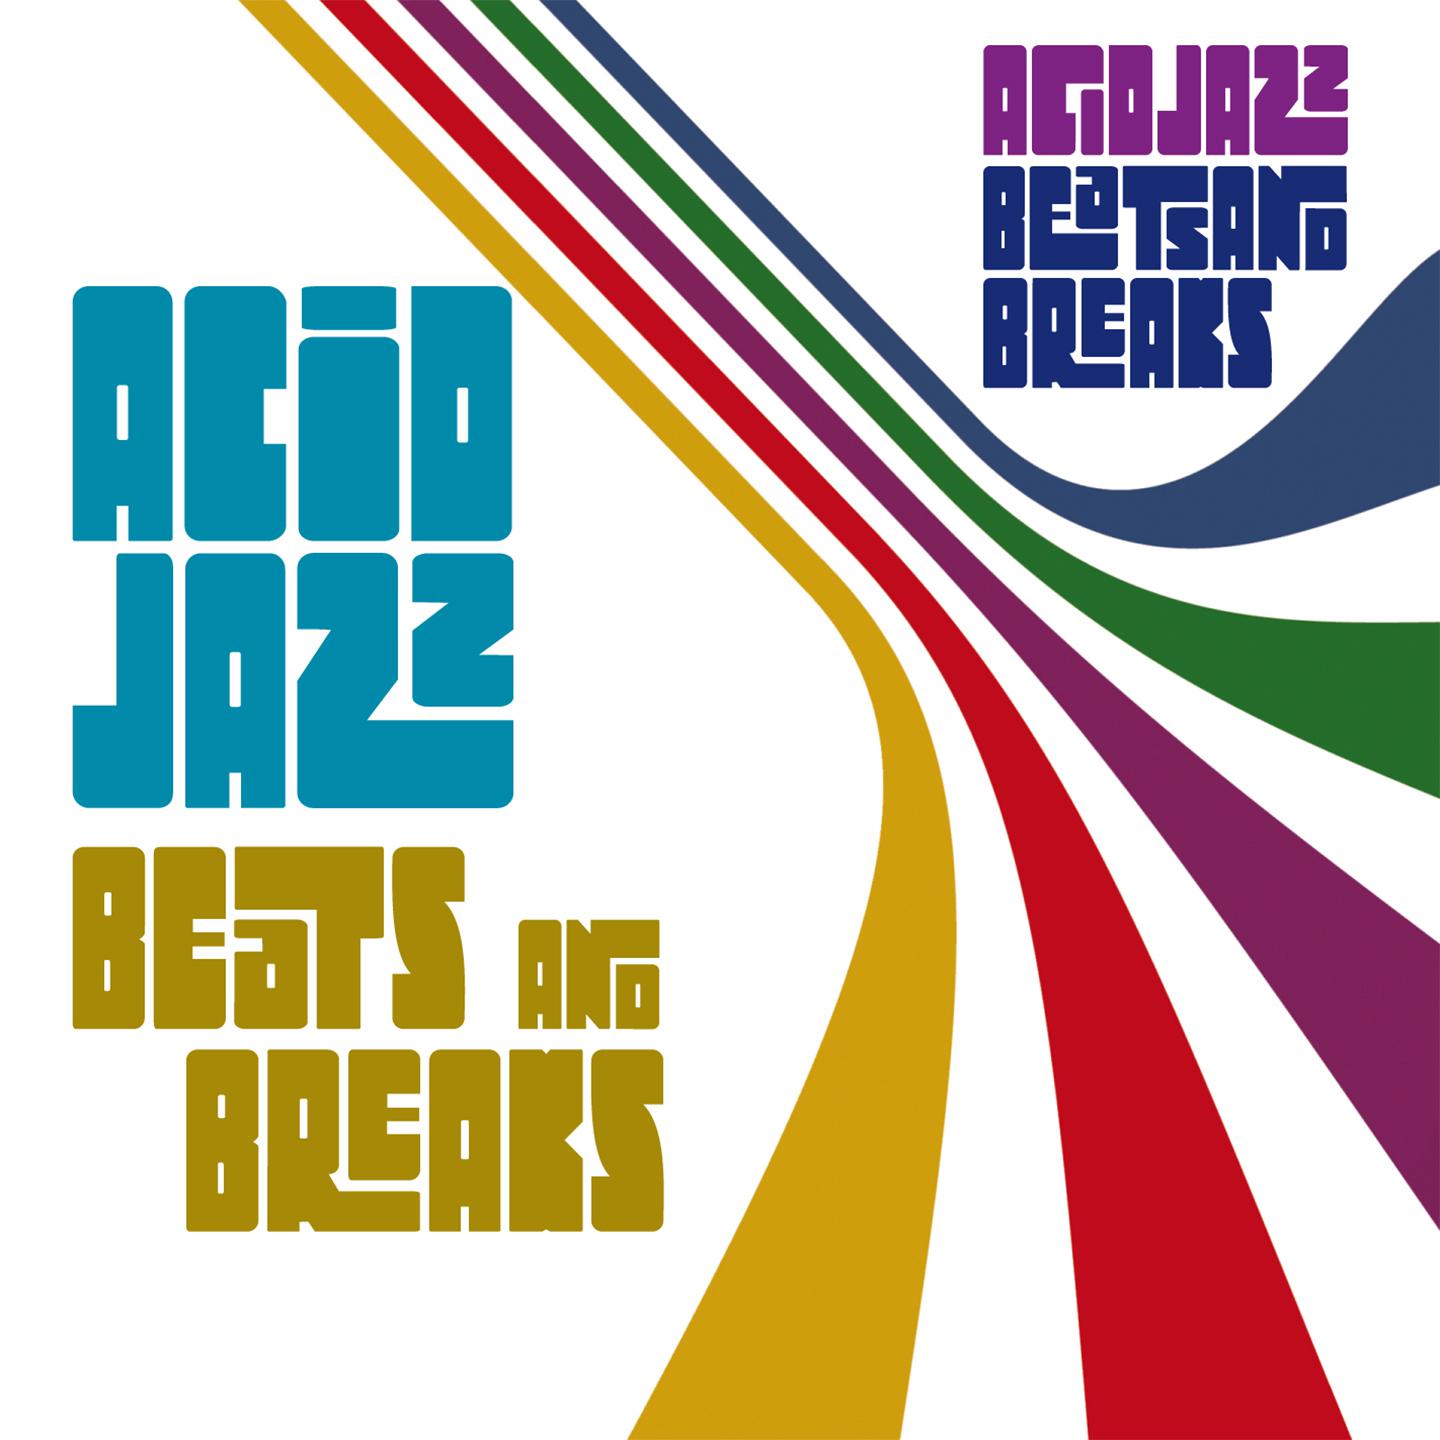 Acid Jazz Beats & Breaks